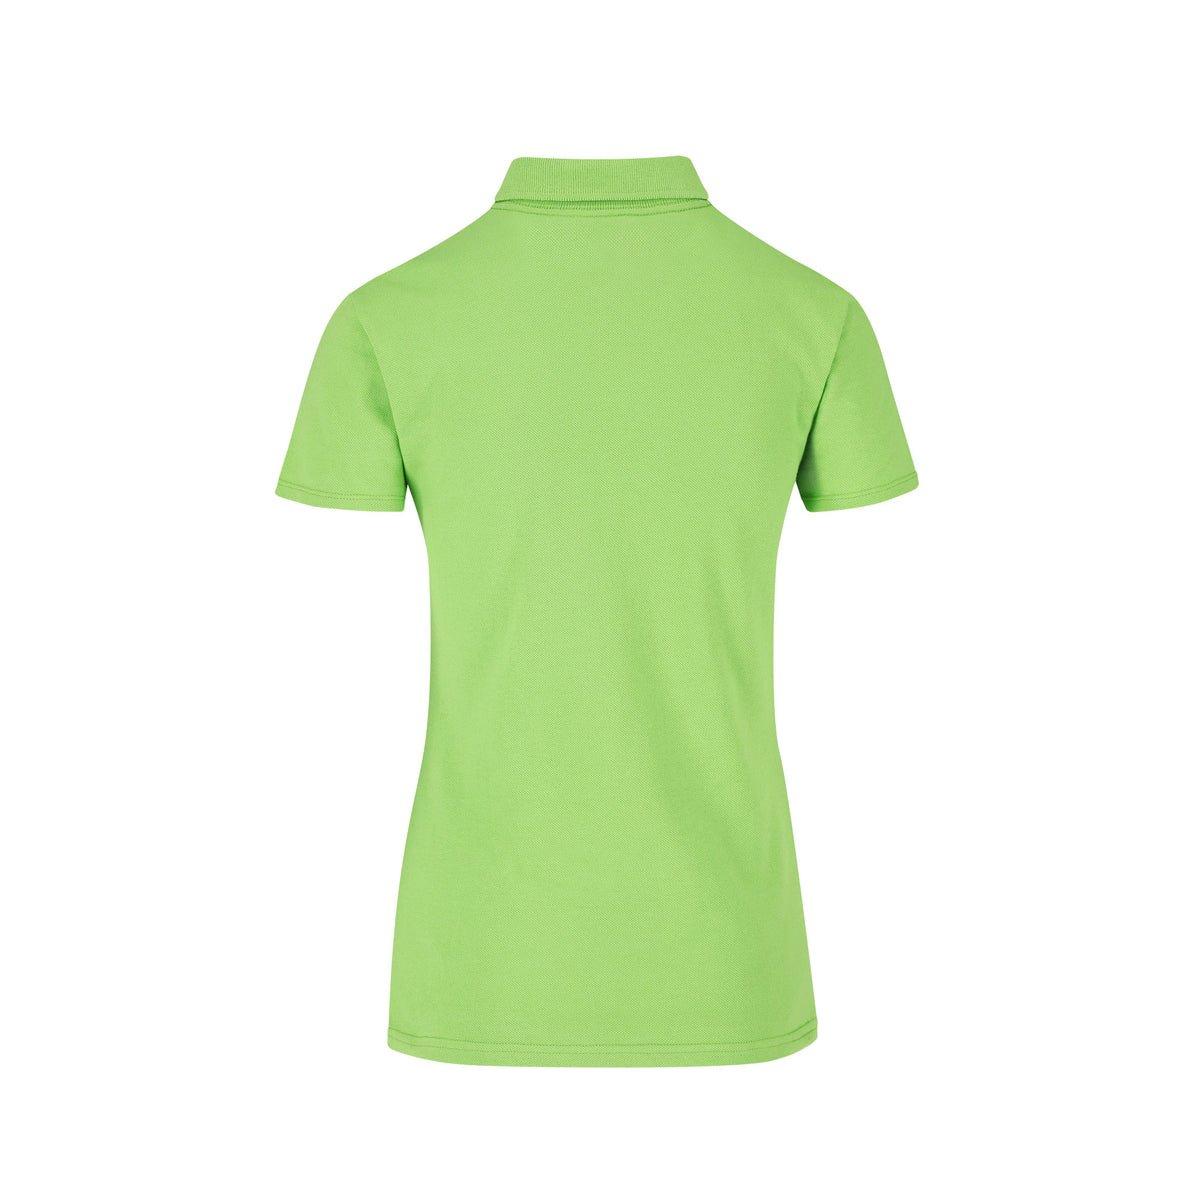 Women’s Silhouette Sport Shirt (Lime) – Yazbek USA Mint